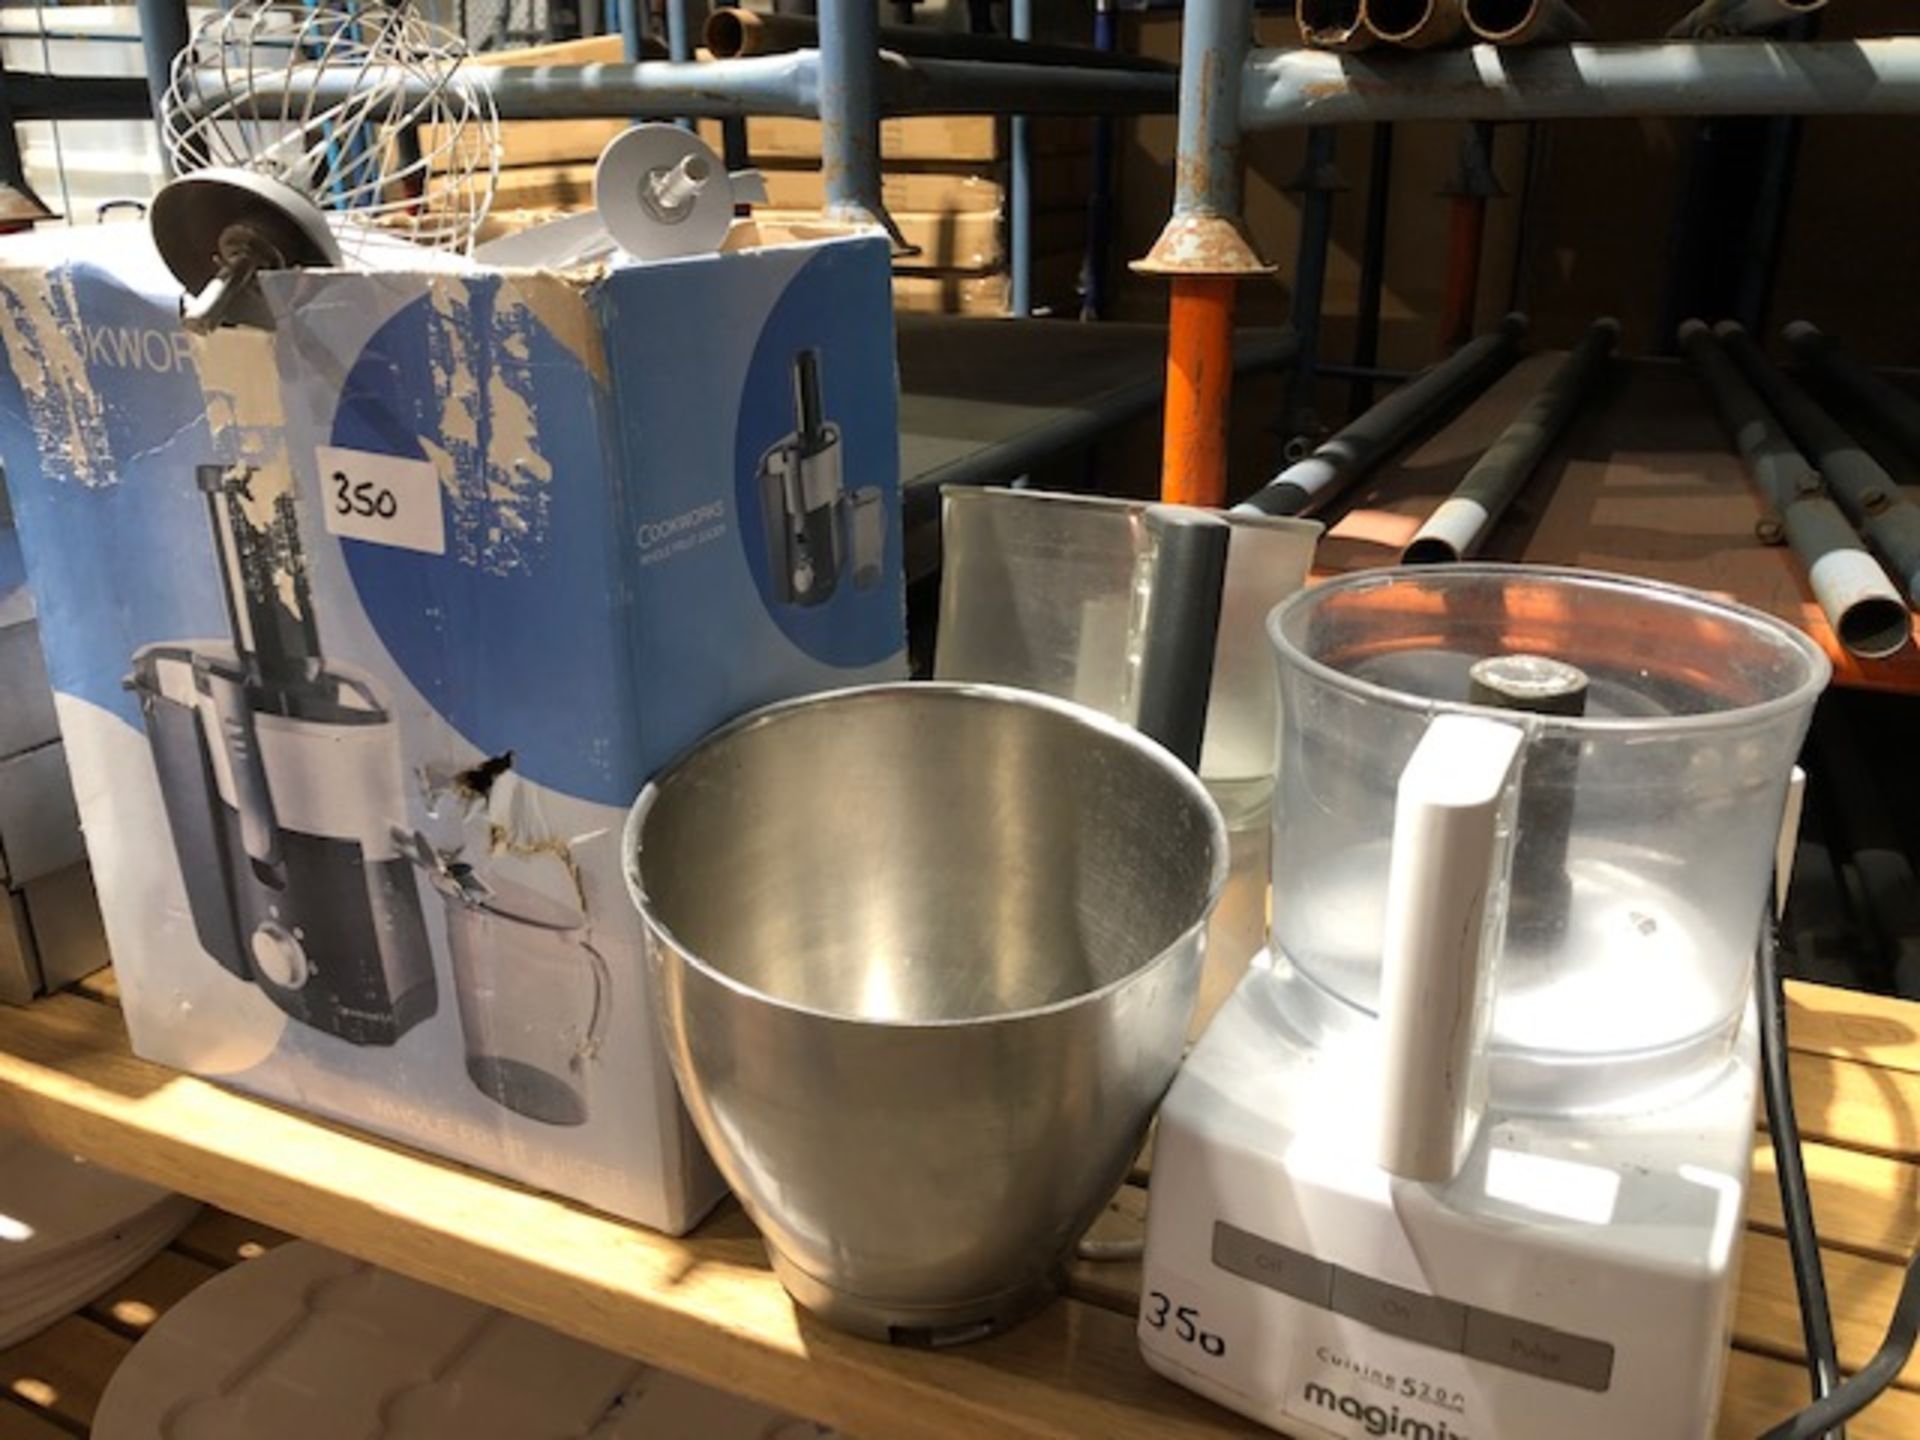 * Magimix blender cookworks juicer and mixer utensils Located at Grantham, NG32 2AG